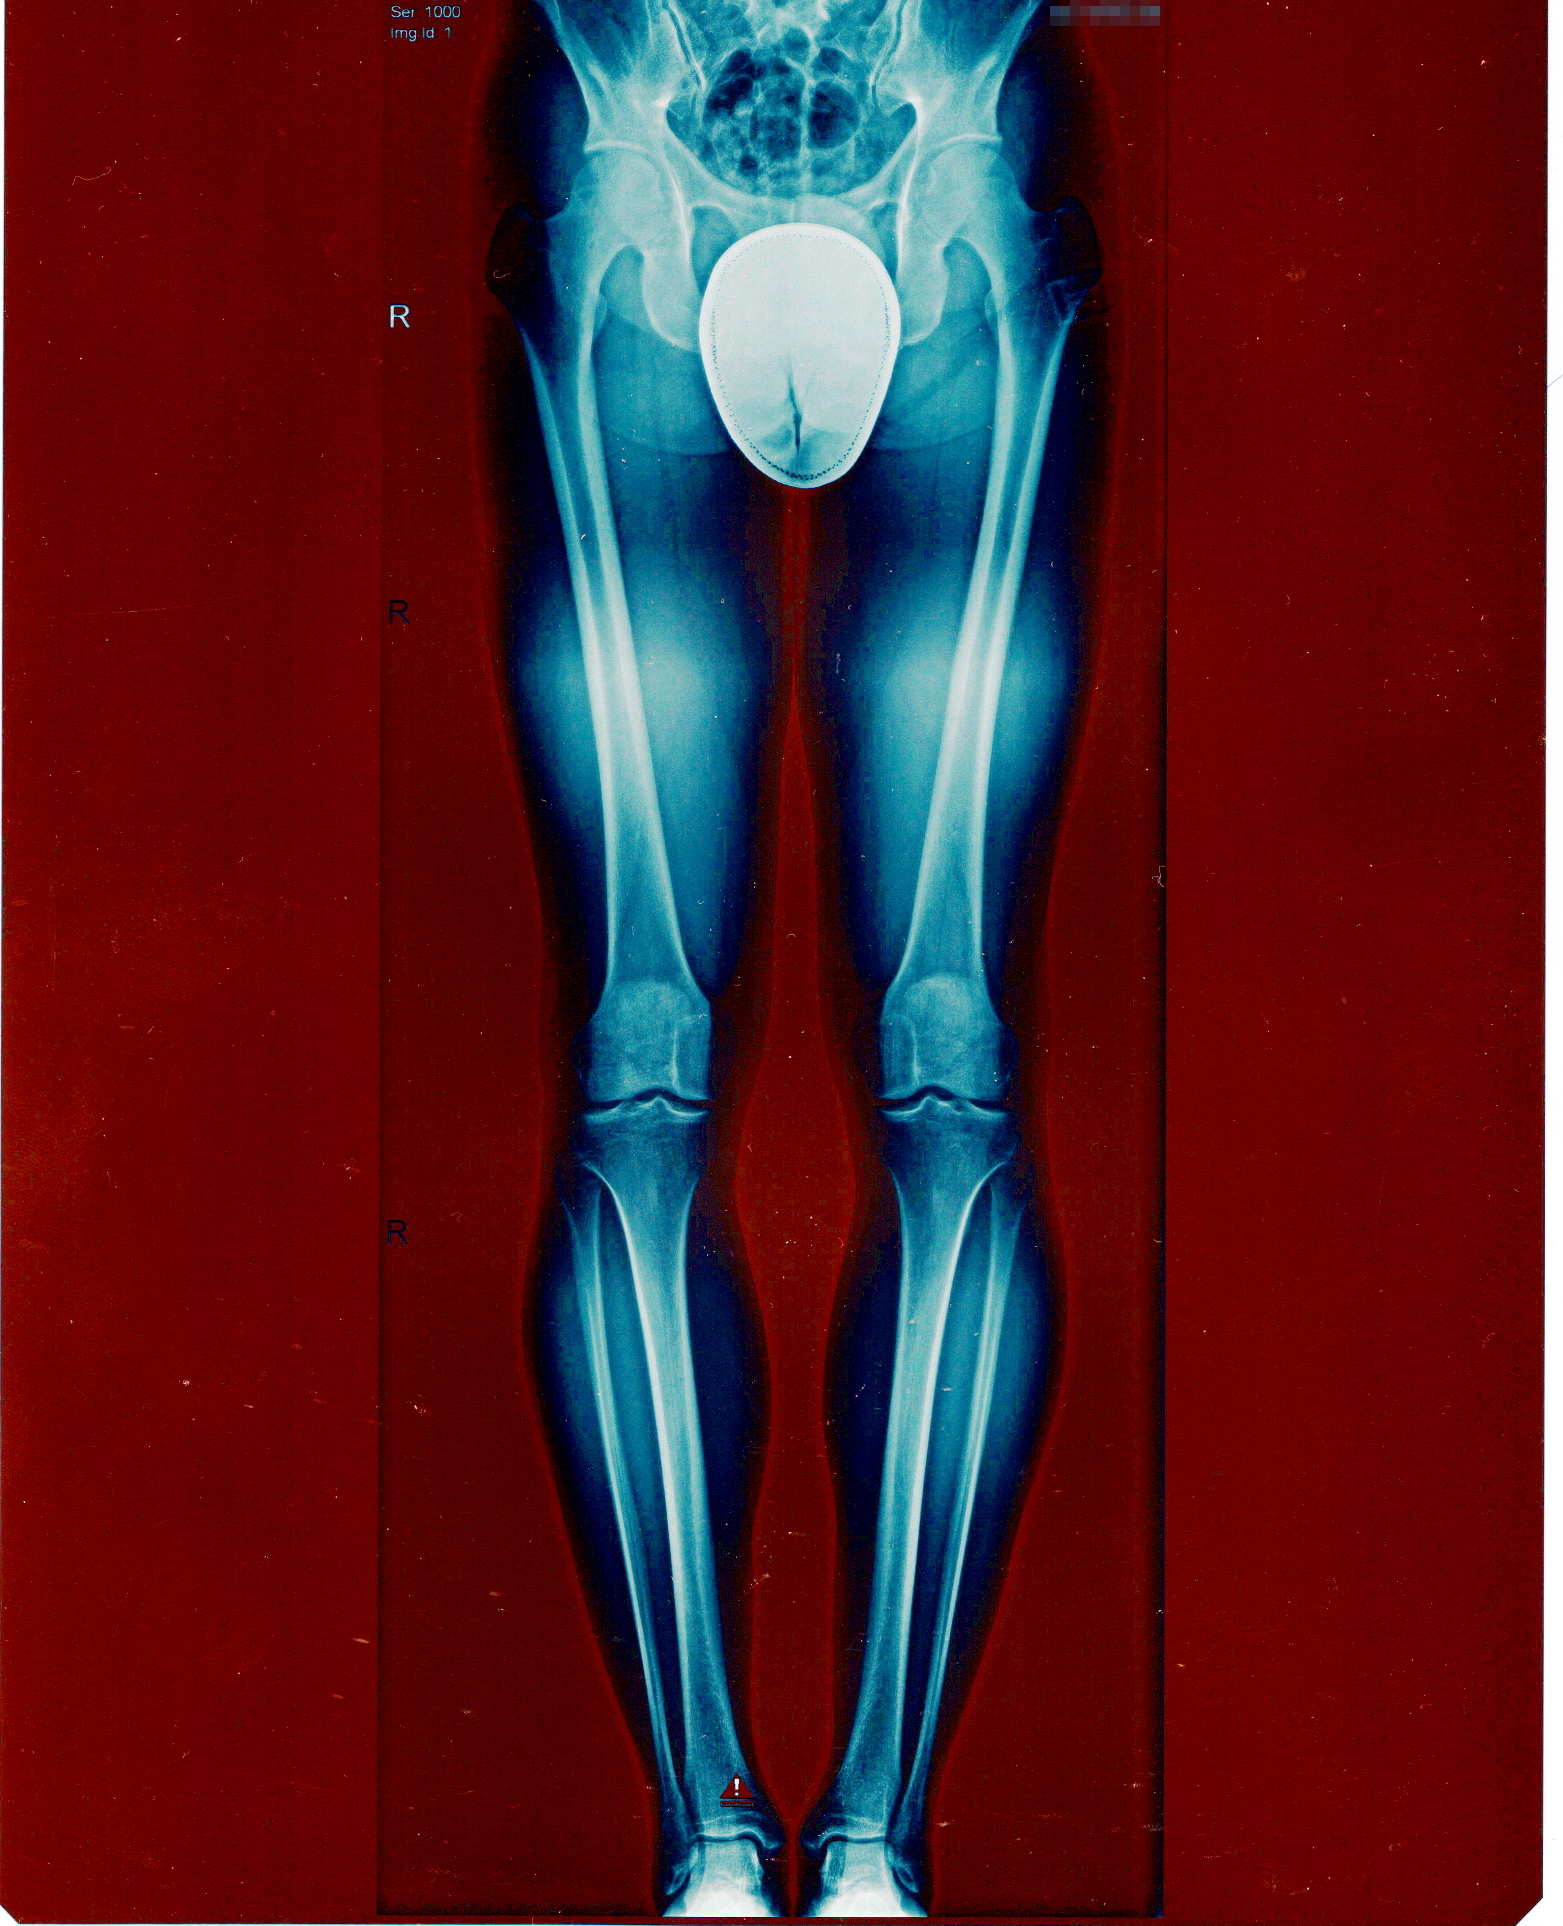 Photo description: X rays of my legs